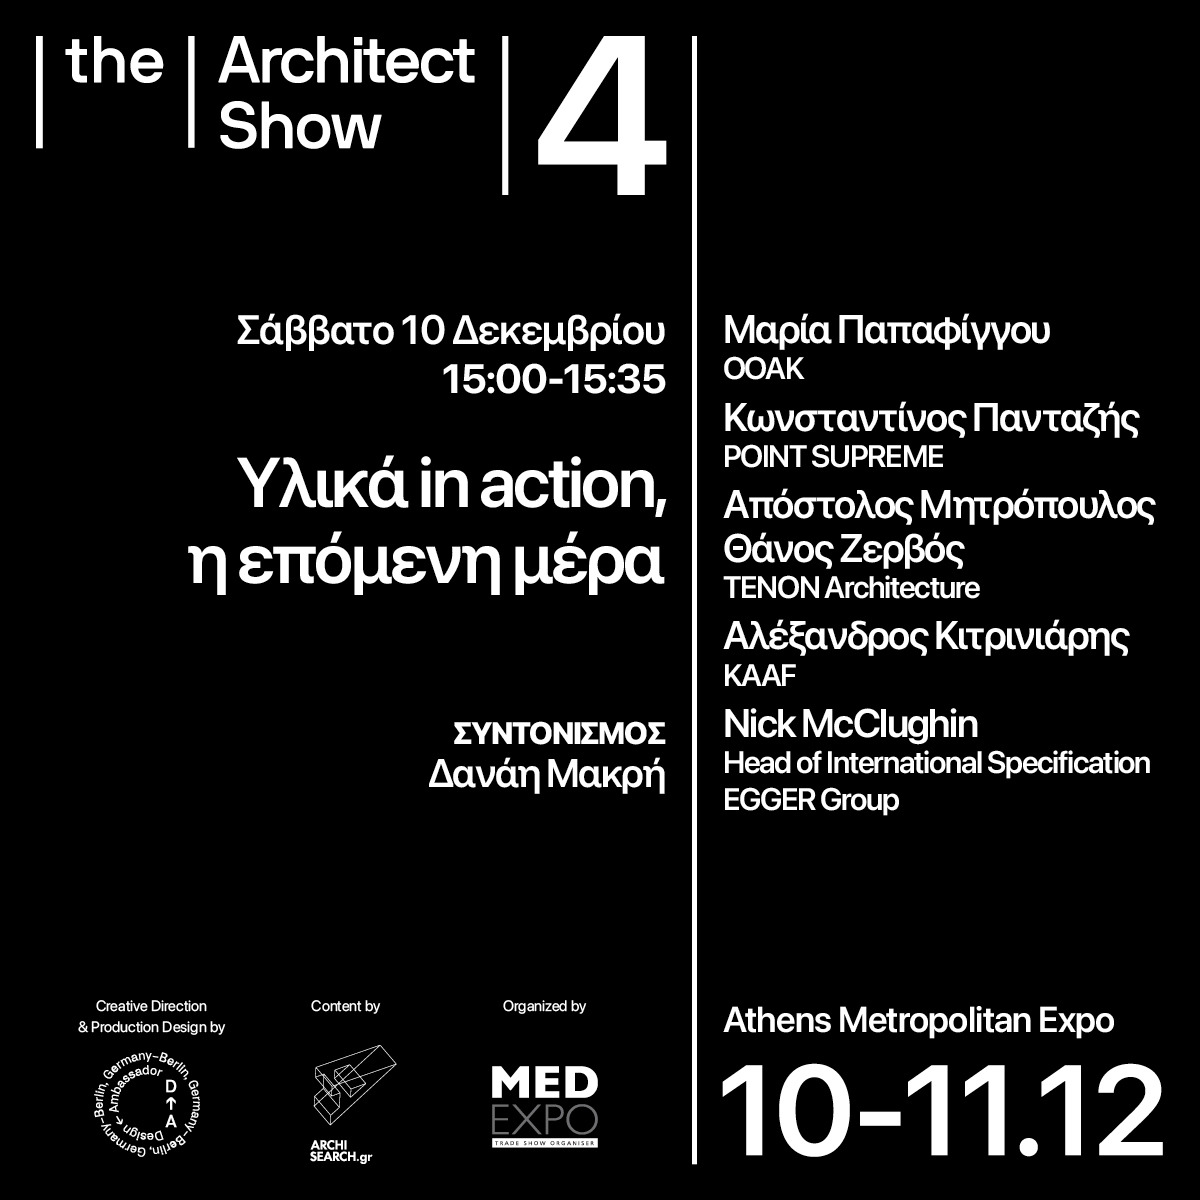 Archisearch The Architect Show 4 _ 'Fast forward', 10&11 Δεκεμβρίου 2022, Metropolitan Expo: τι θα δούμε την πρώτη μέρα του συνεδρίου που αναμένεται να αποτελέσει μία ανάσα δημιουργικής ανταλλαγής γνώσεων και ιδεών